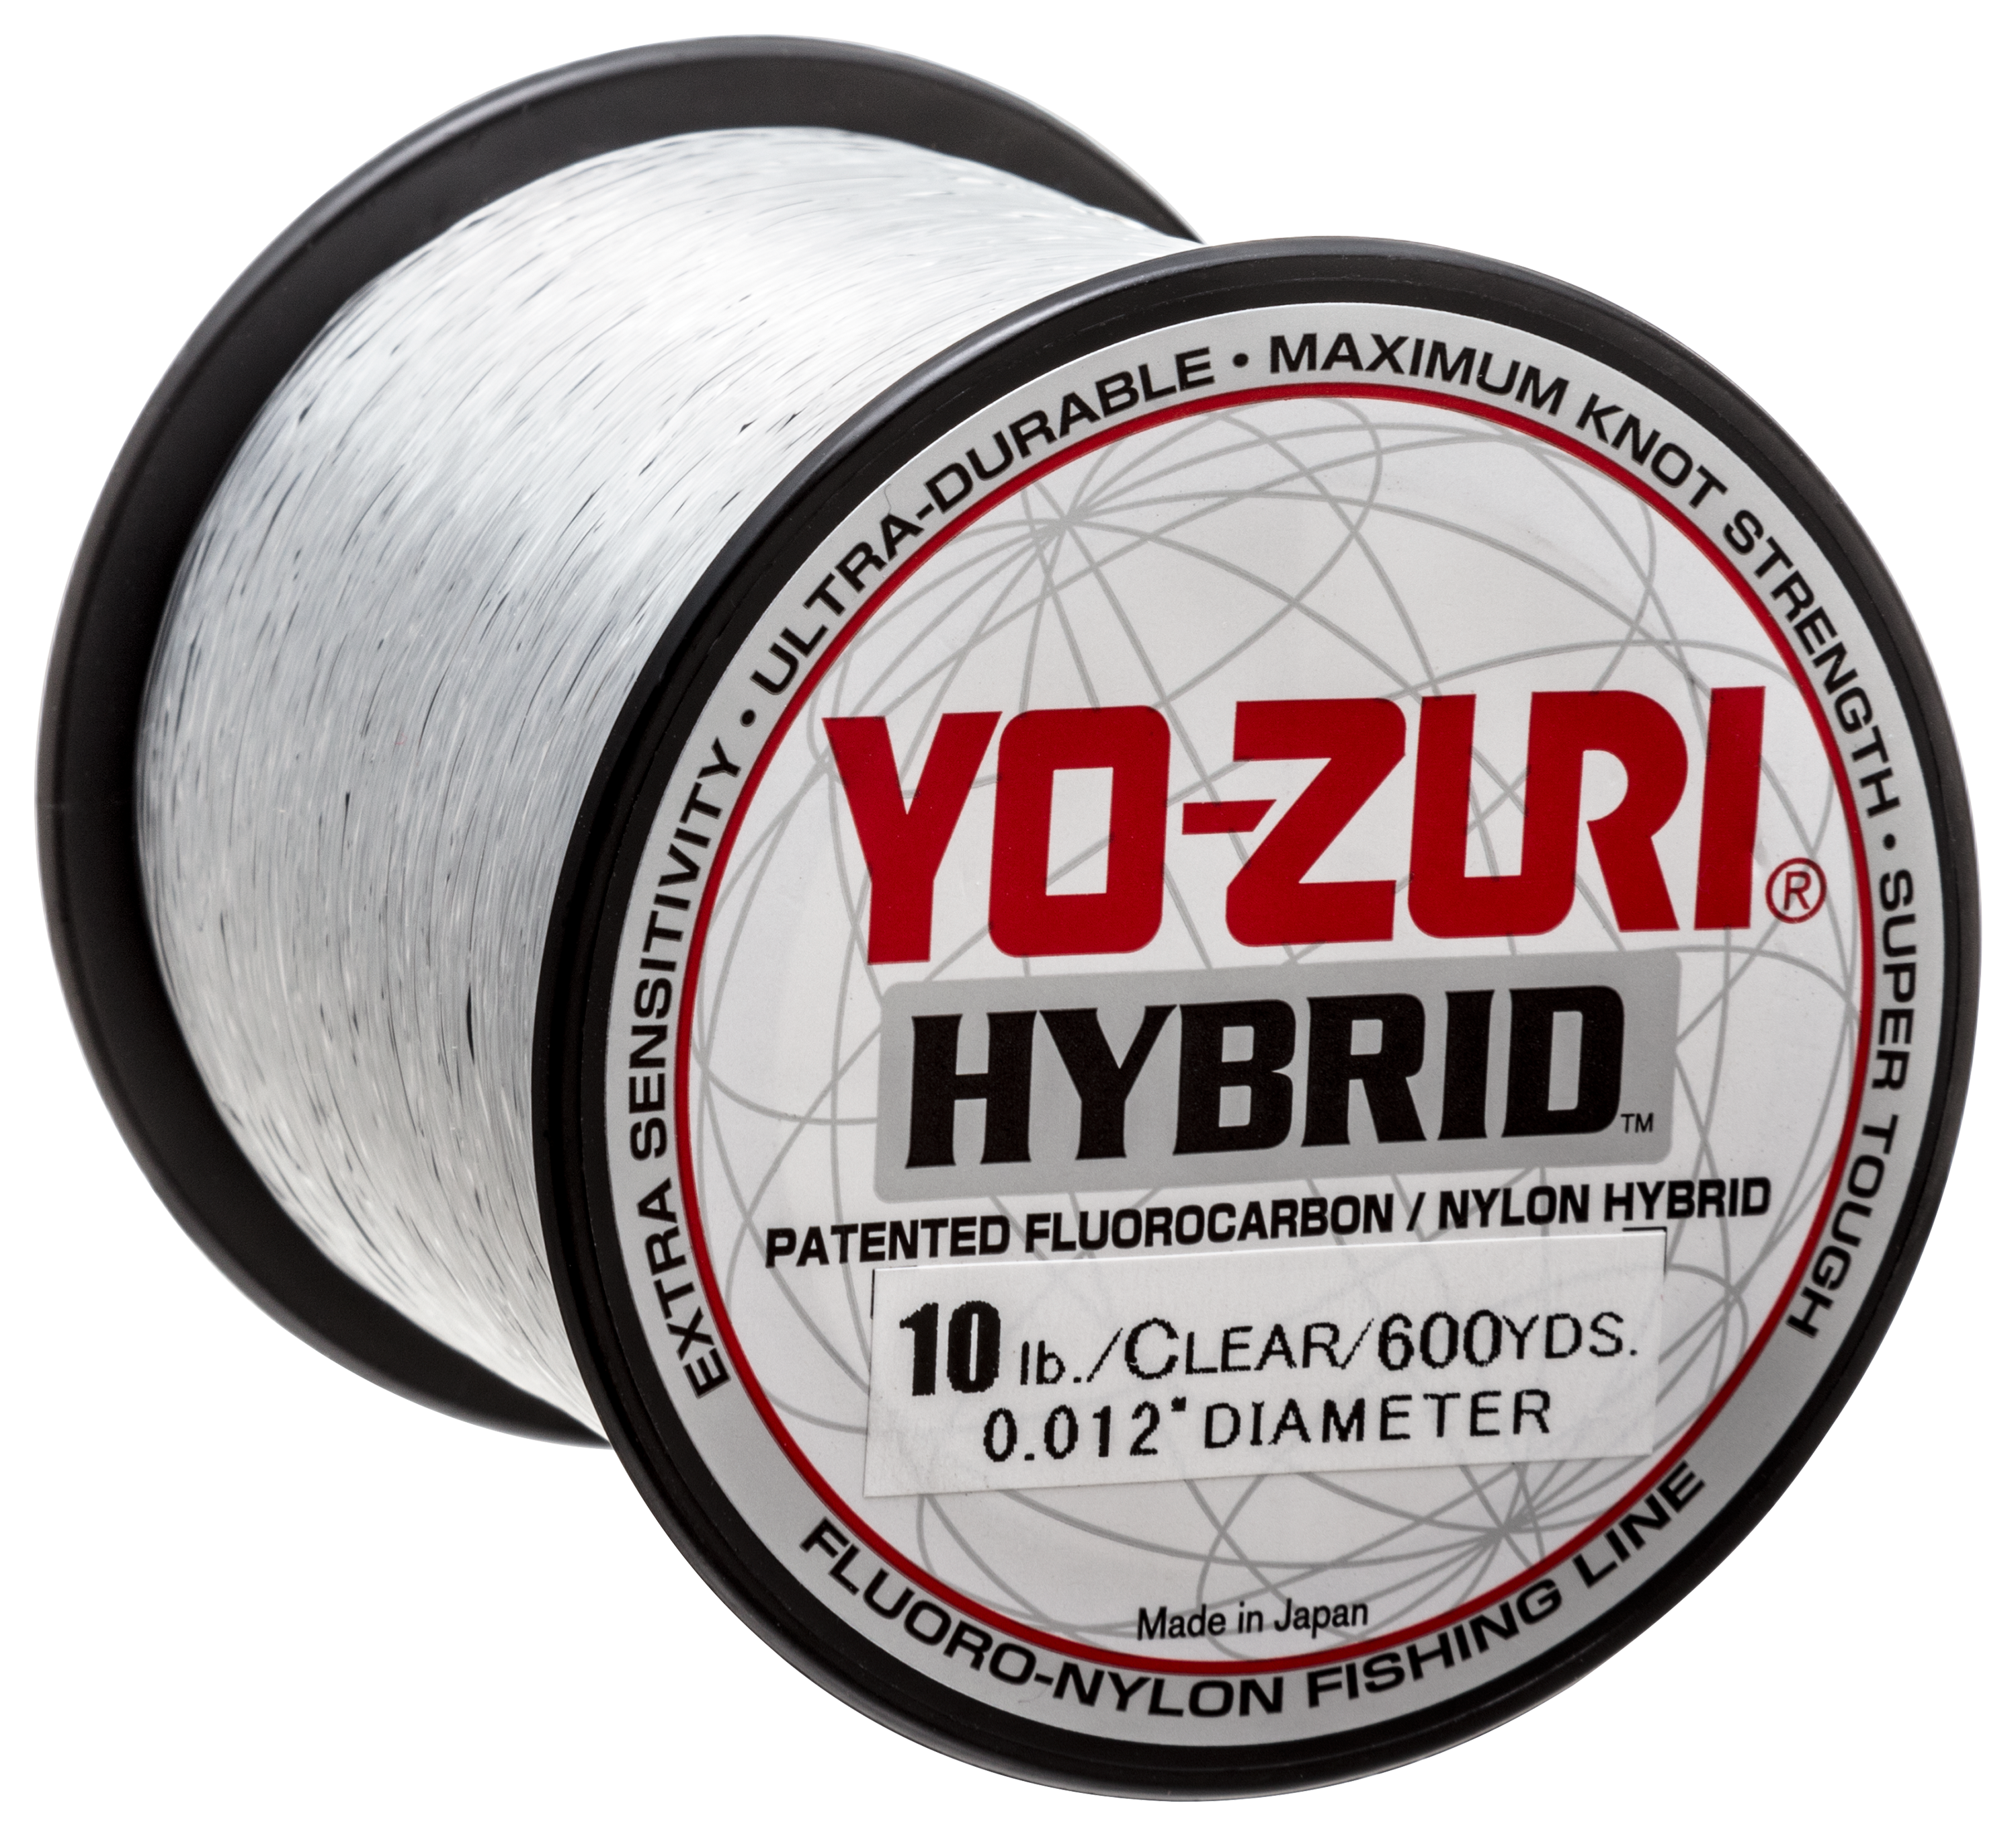 JAPAN Yo-Zuri Hybrid Fluorocarbon Nylon Hybrid 275 yds Fishing Line Clear 